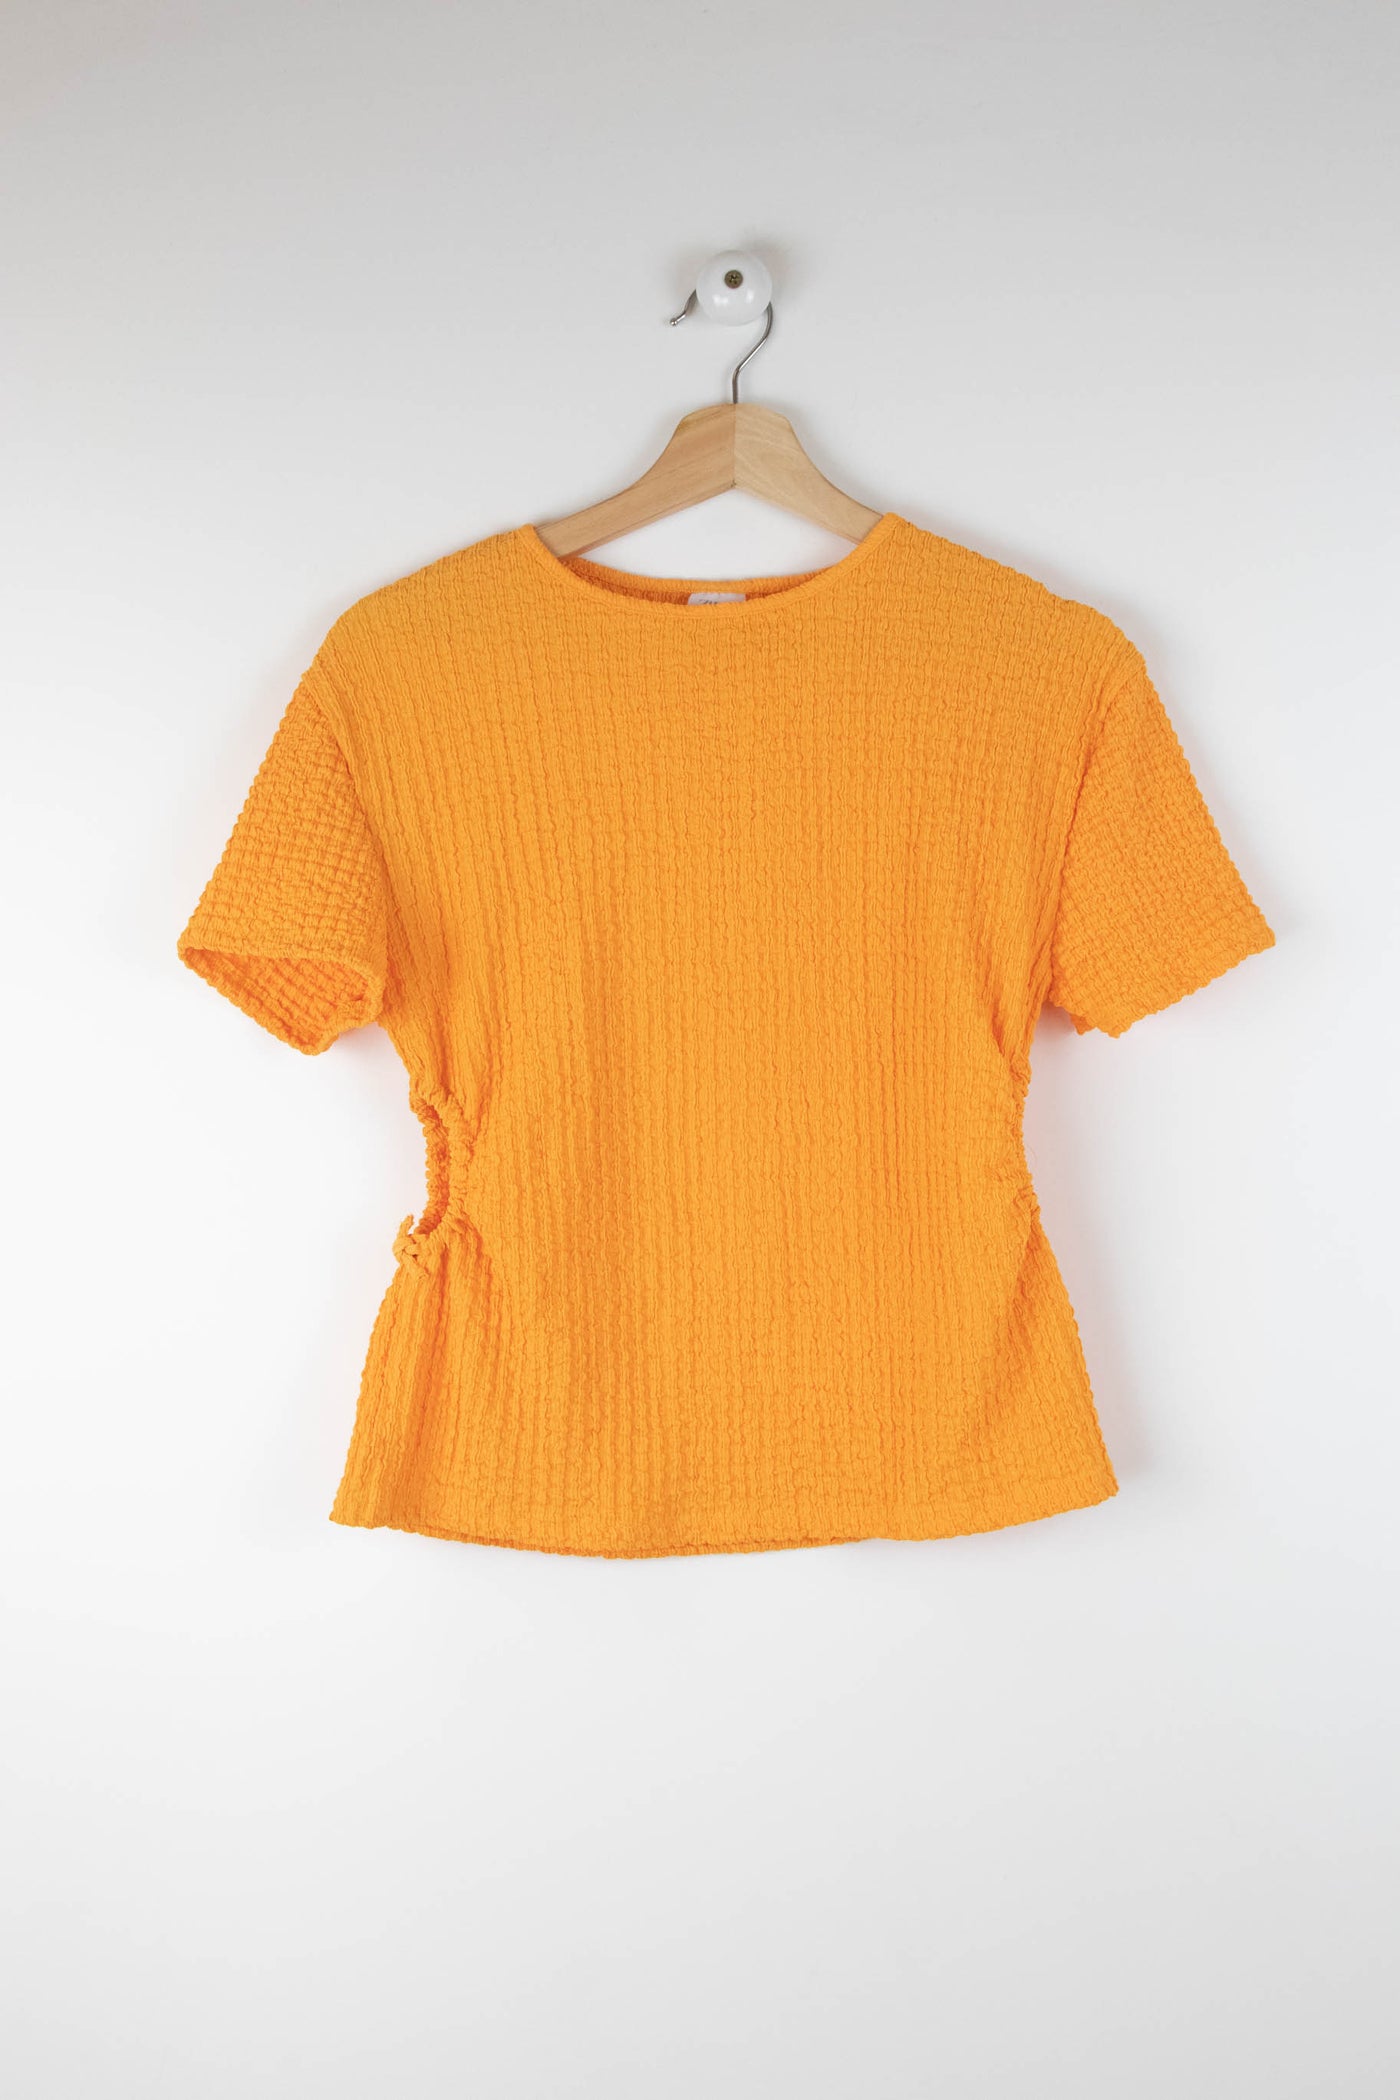 Camiseta naranja con aberturas en laterales